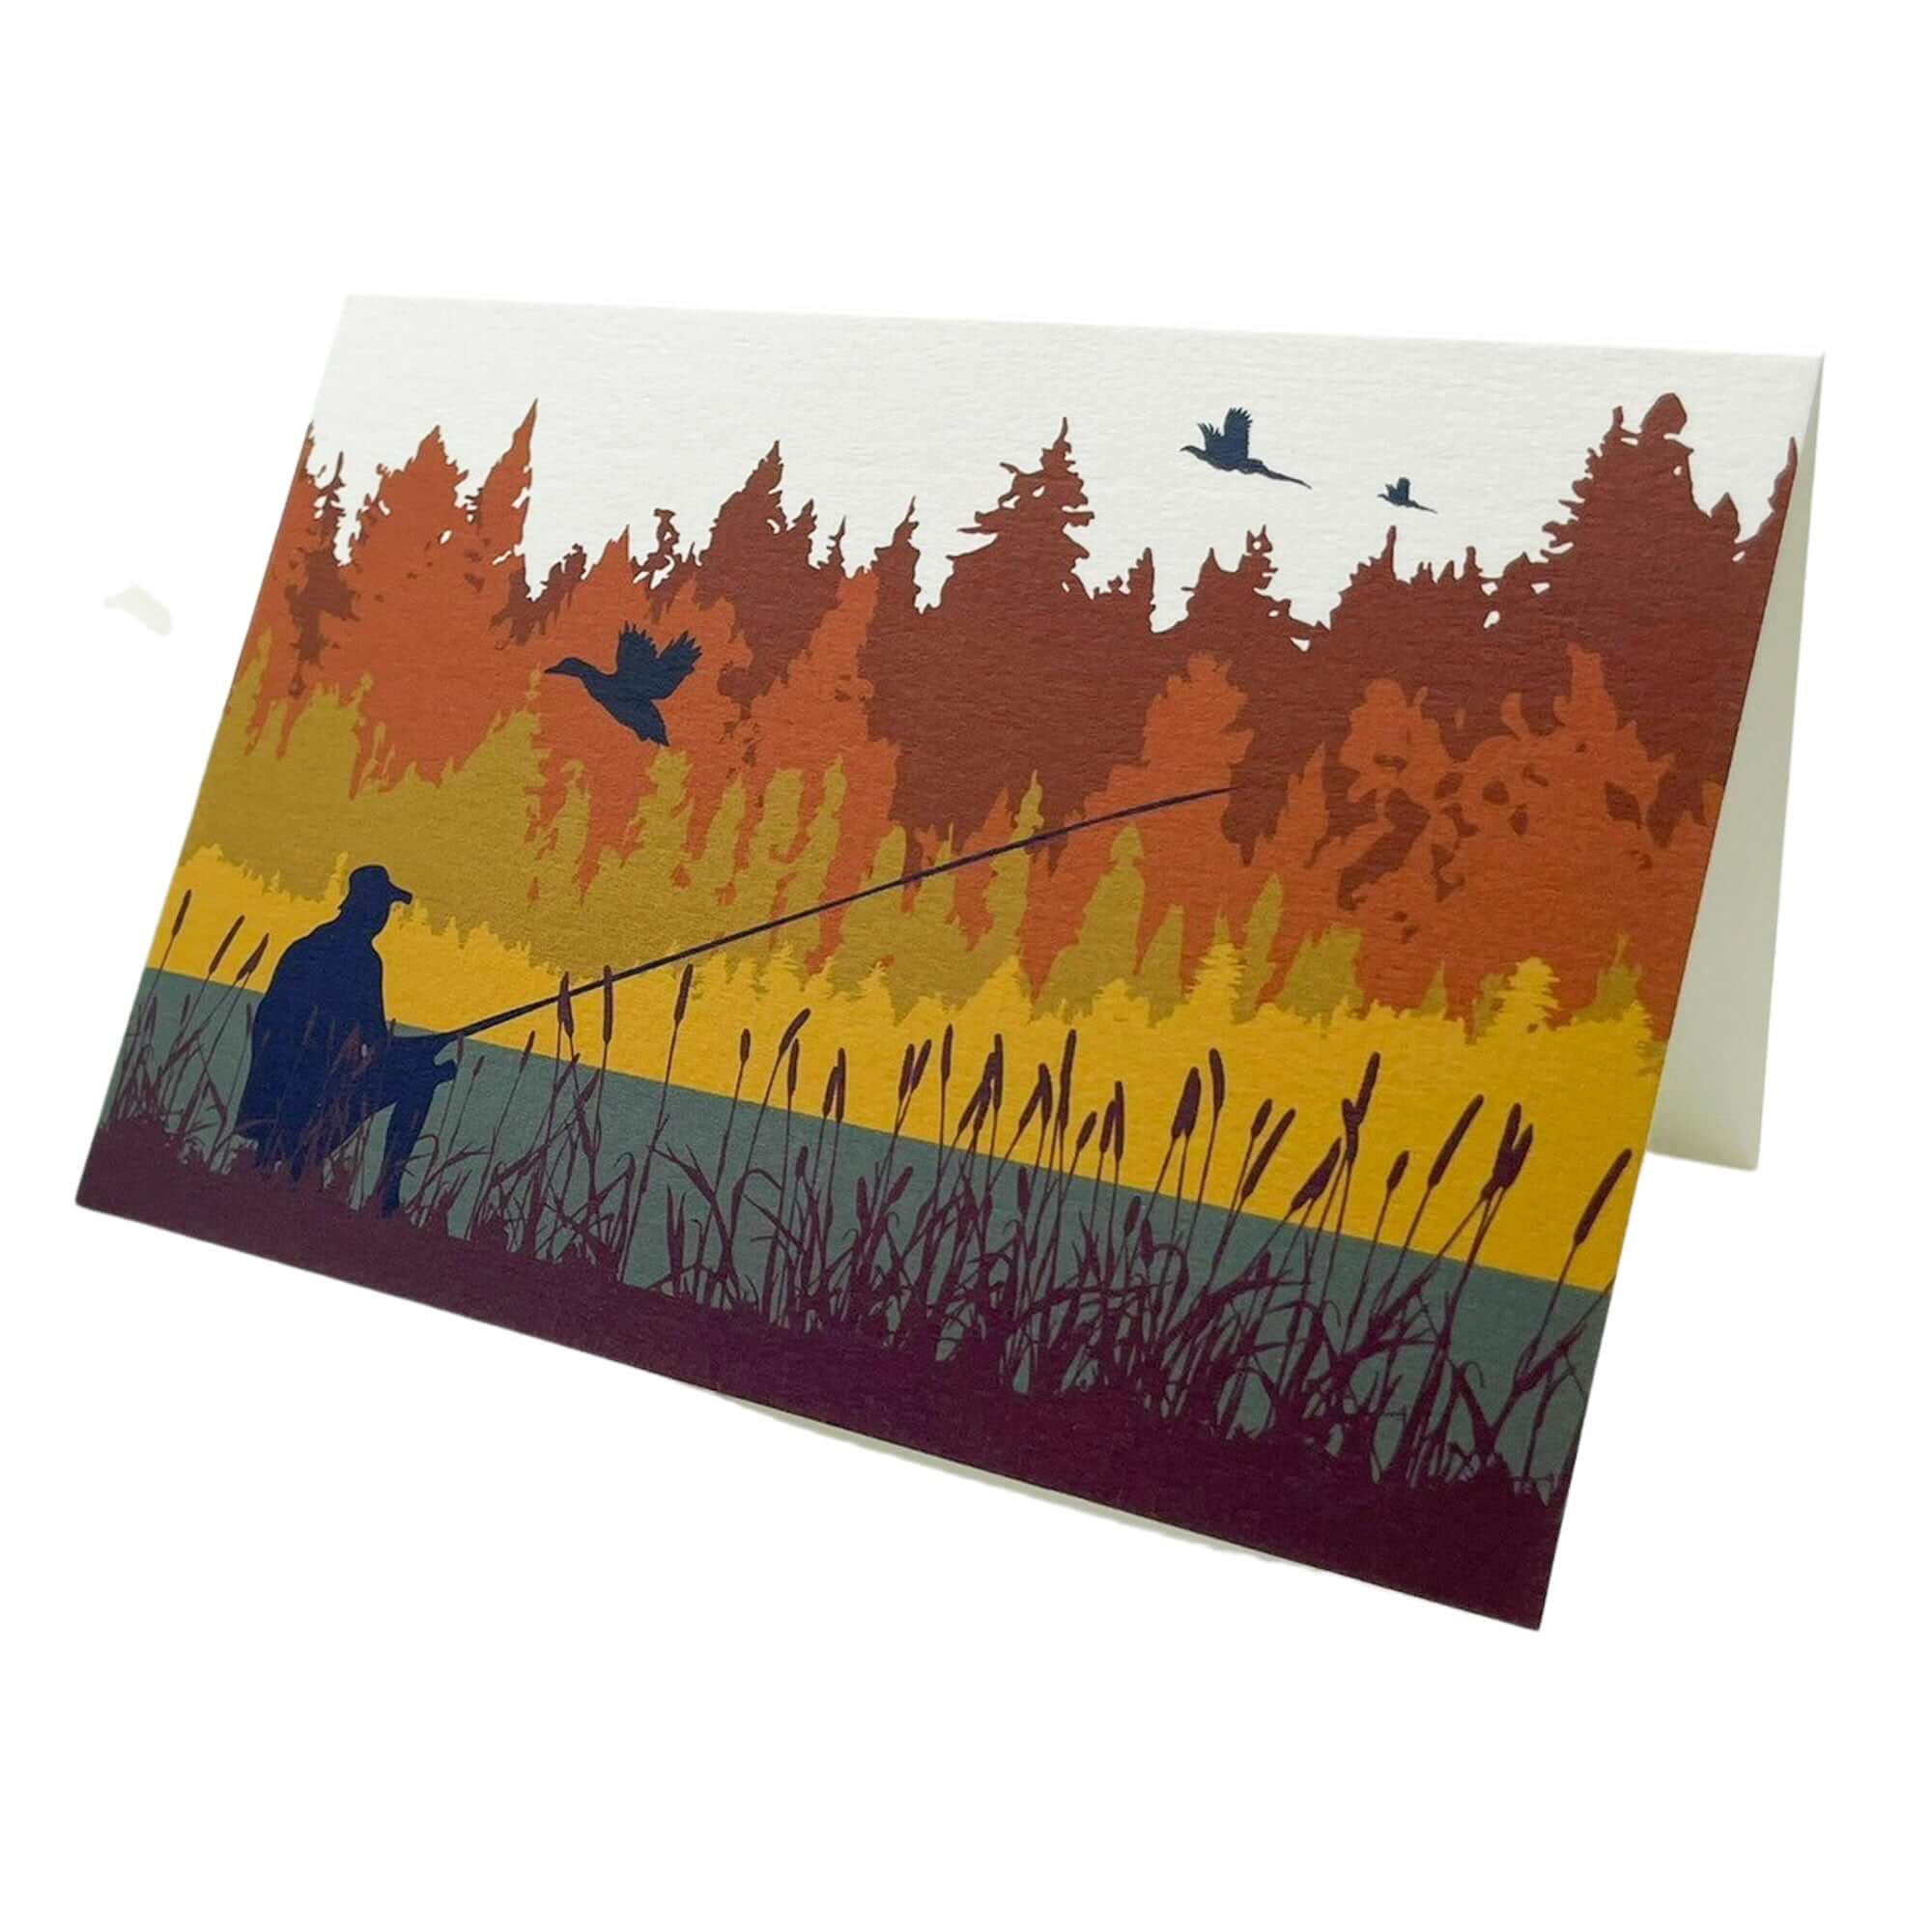 Autumn Coarse Fishing Greetings Card Greetings Card Mustard and Gray Ltd Shropshire UK